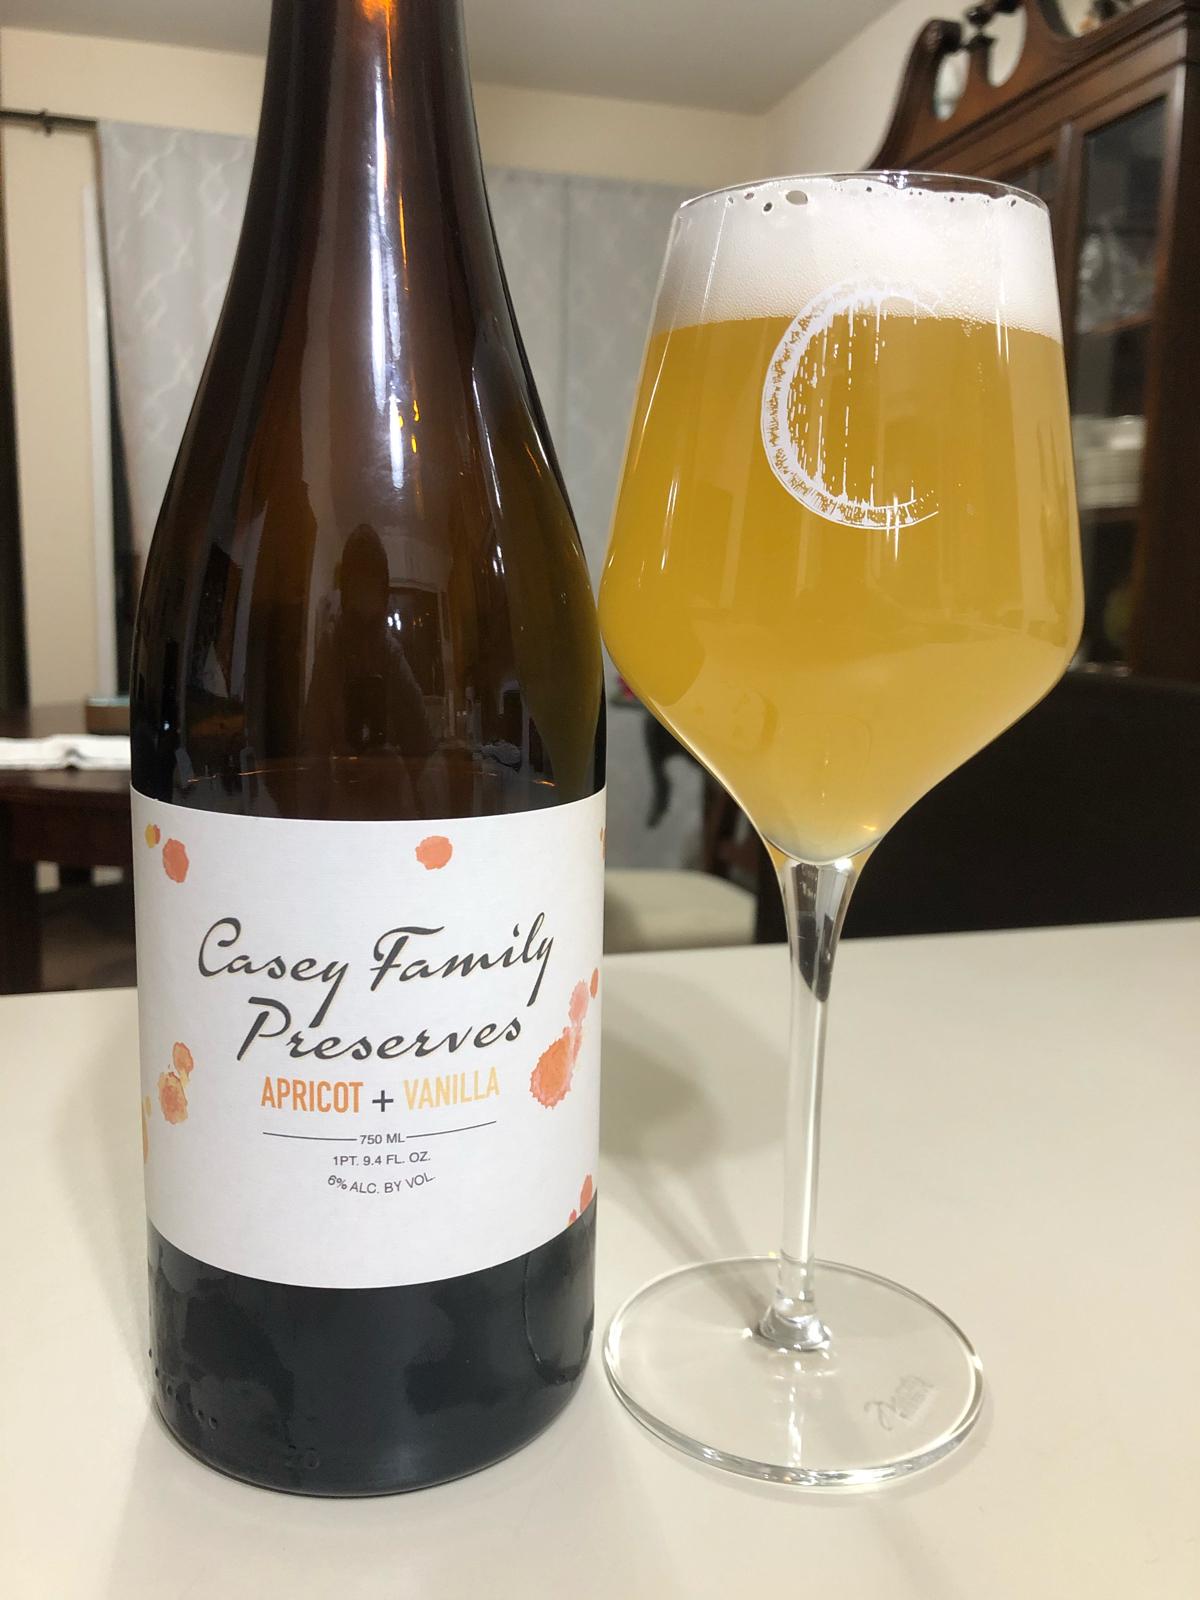 Casey Family Preserves - Apricot / Vanilla - Perfection (8/29/19)